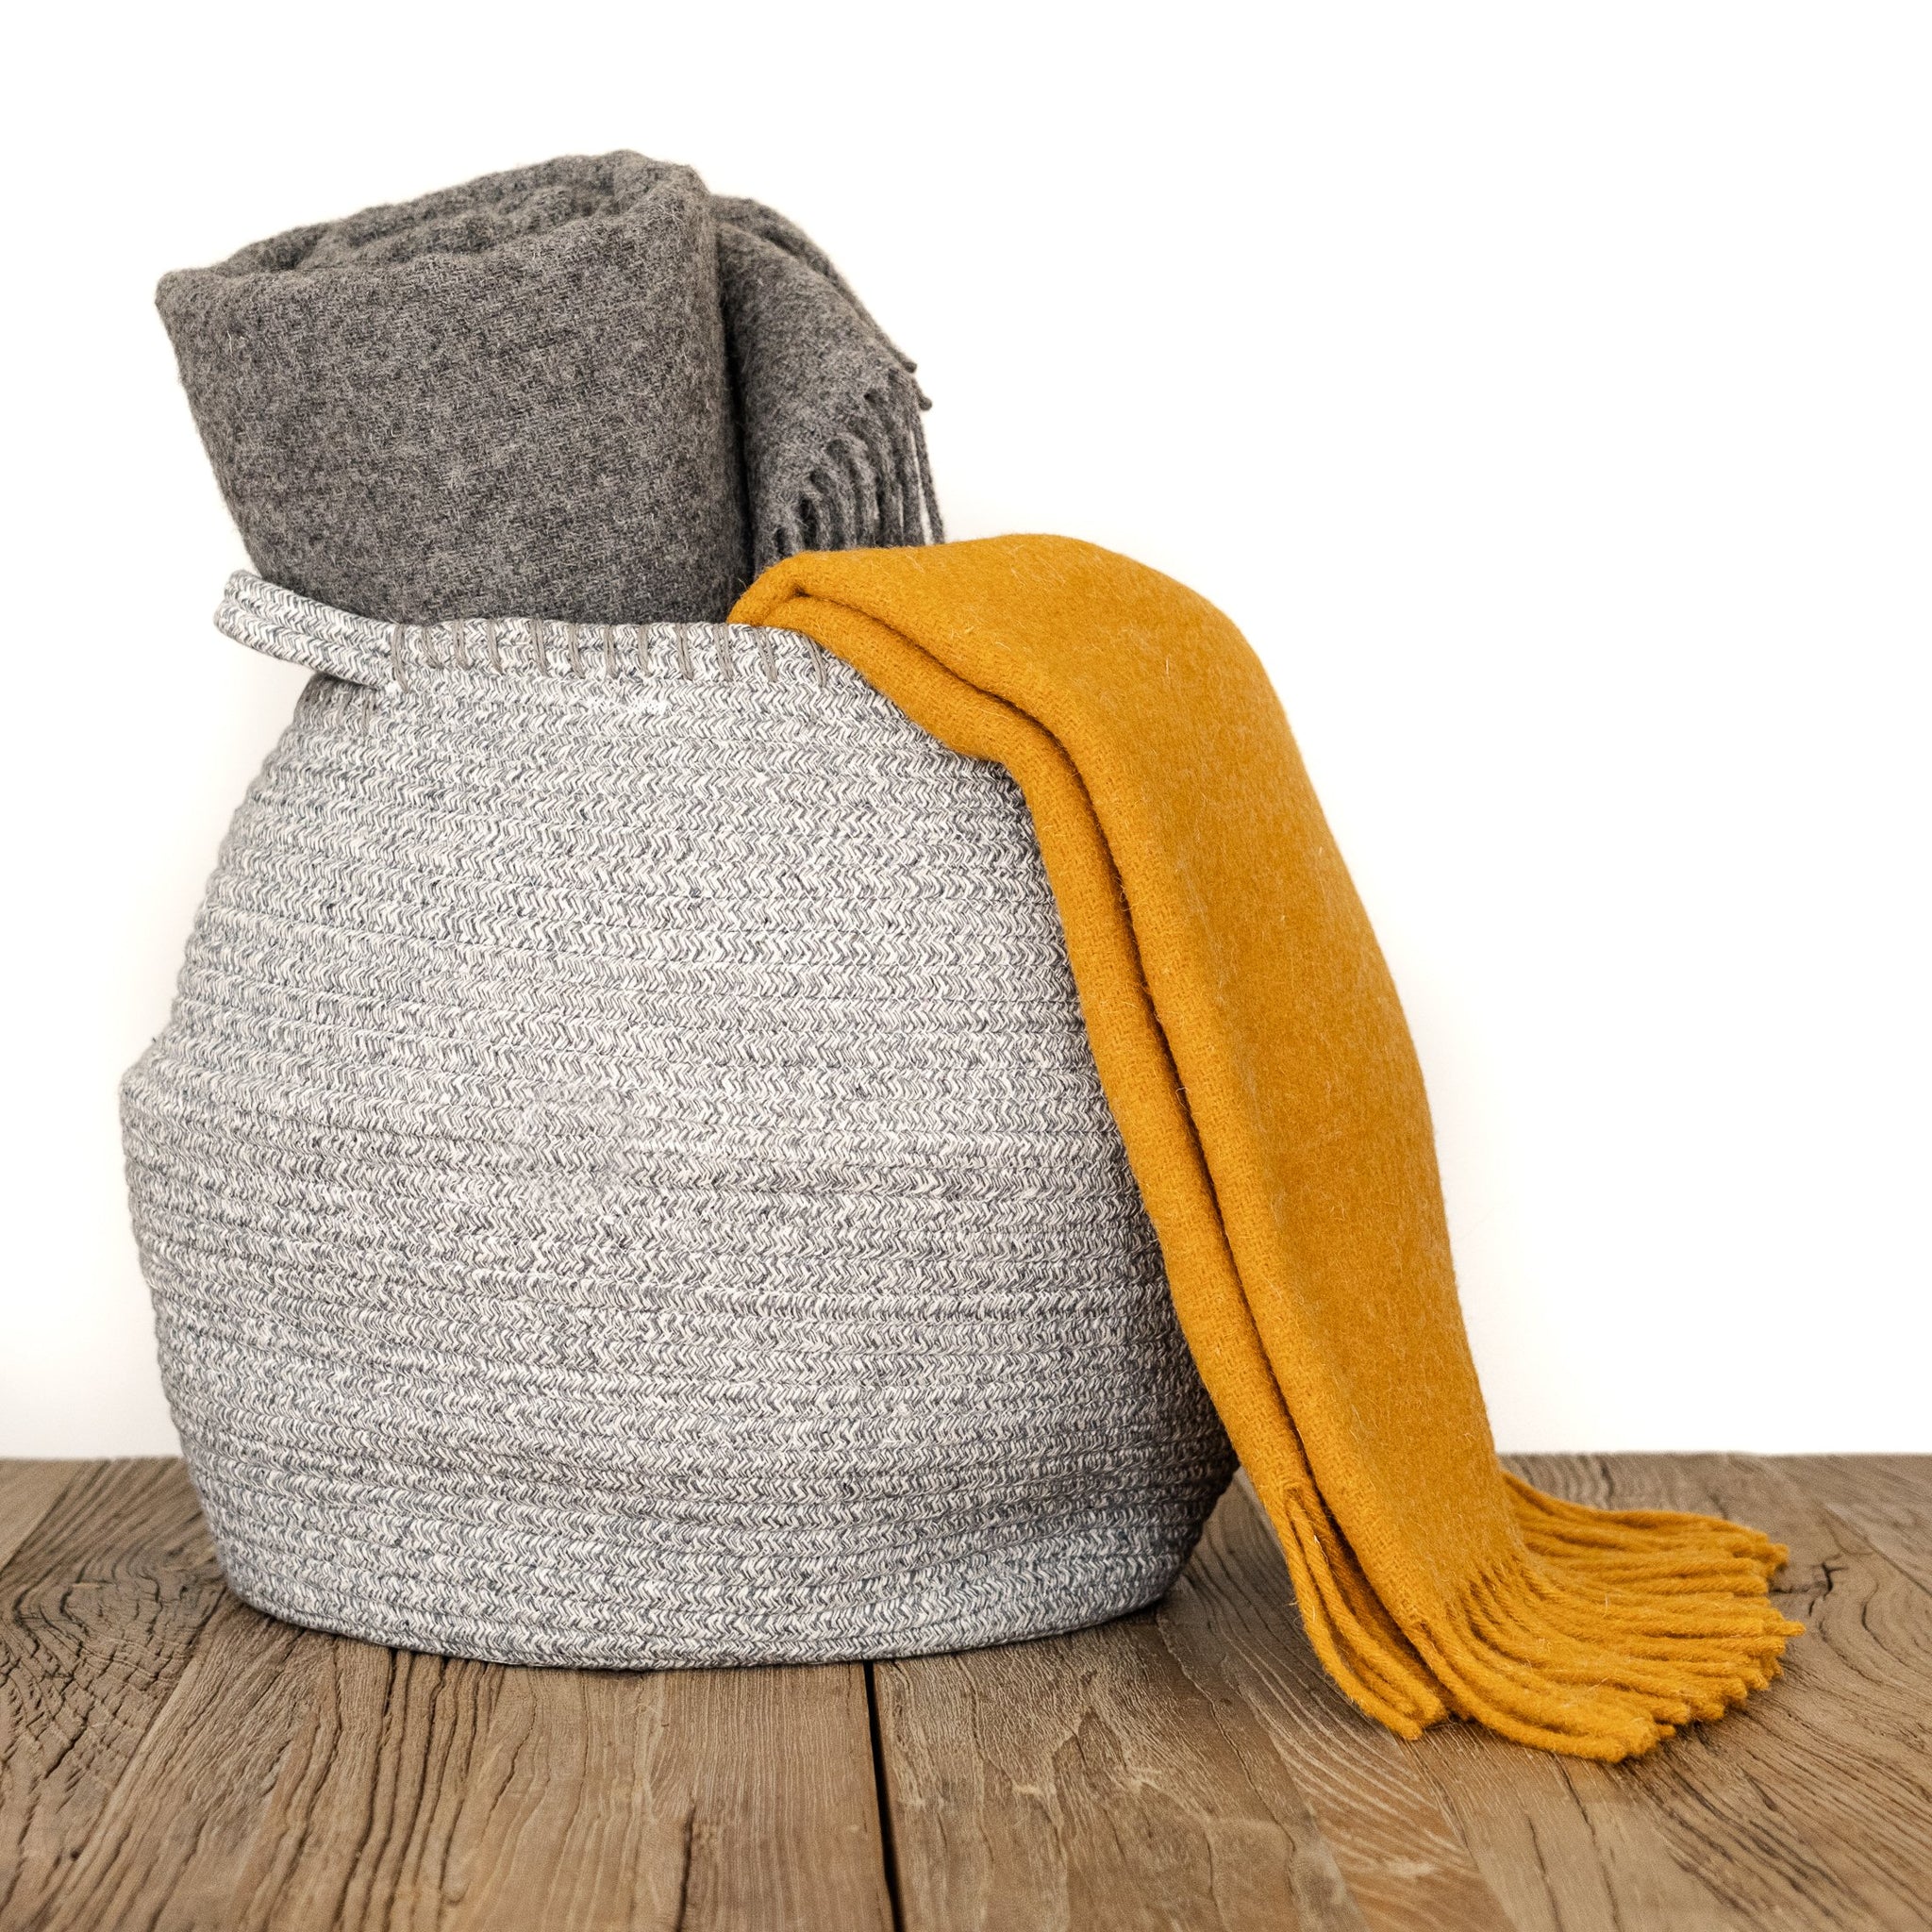 100% natural wool blanket - Dumbo